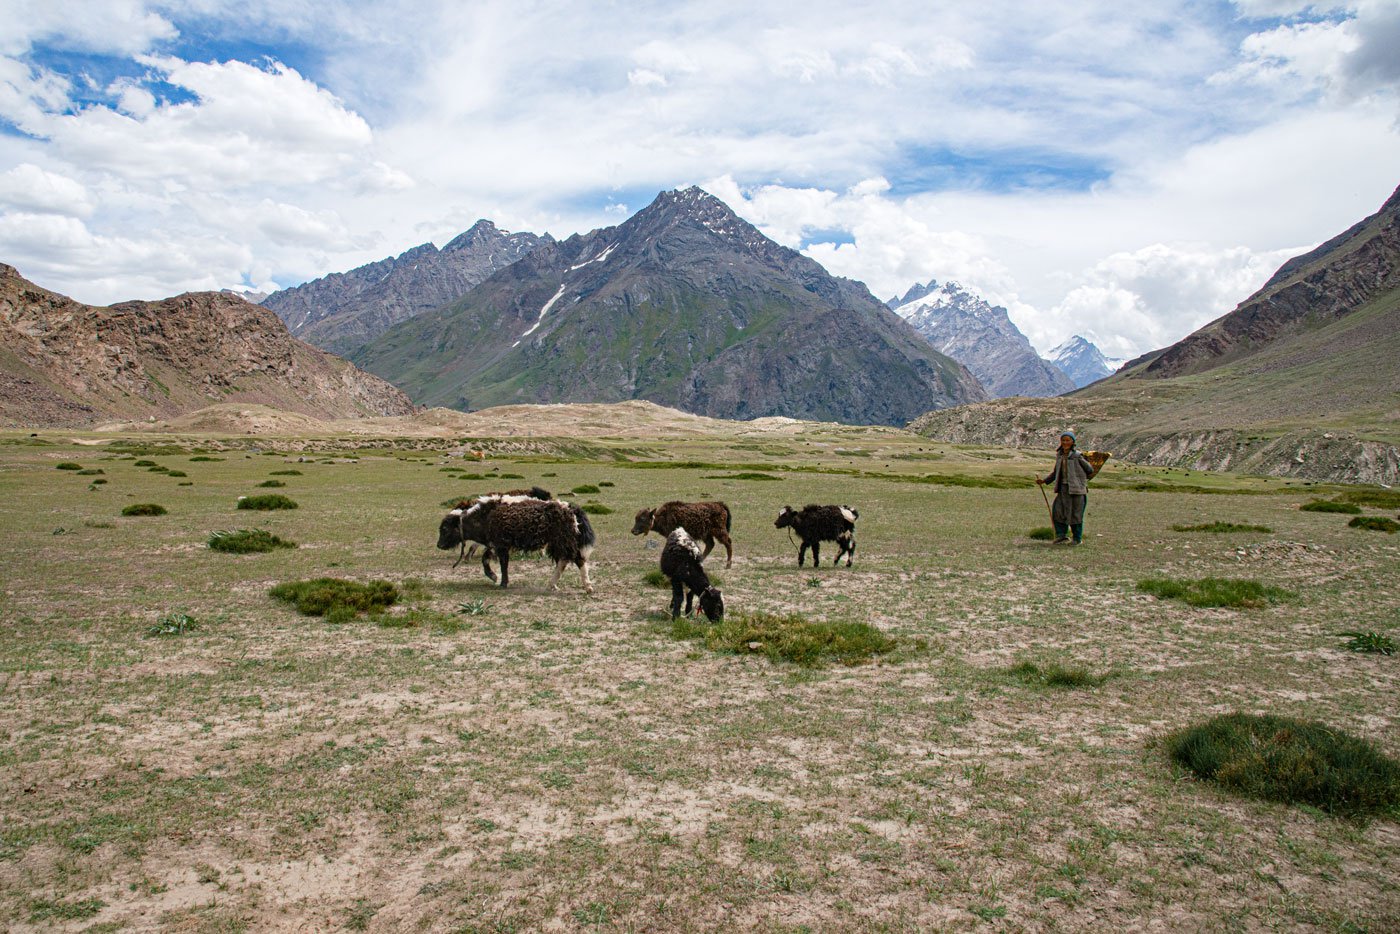 Yaks and dzomo calves grazing at a high altitude grassland